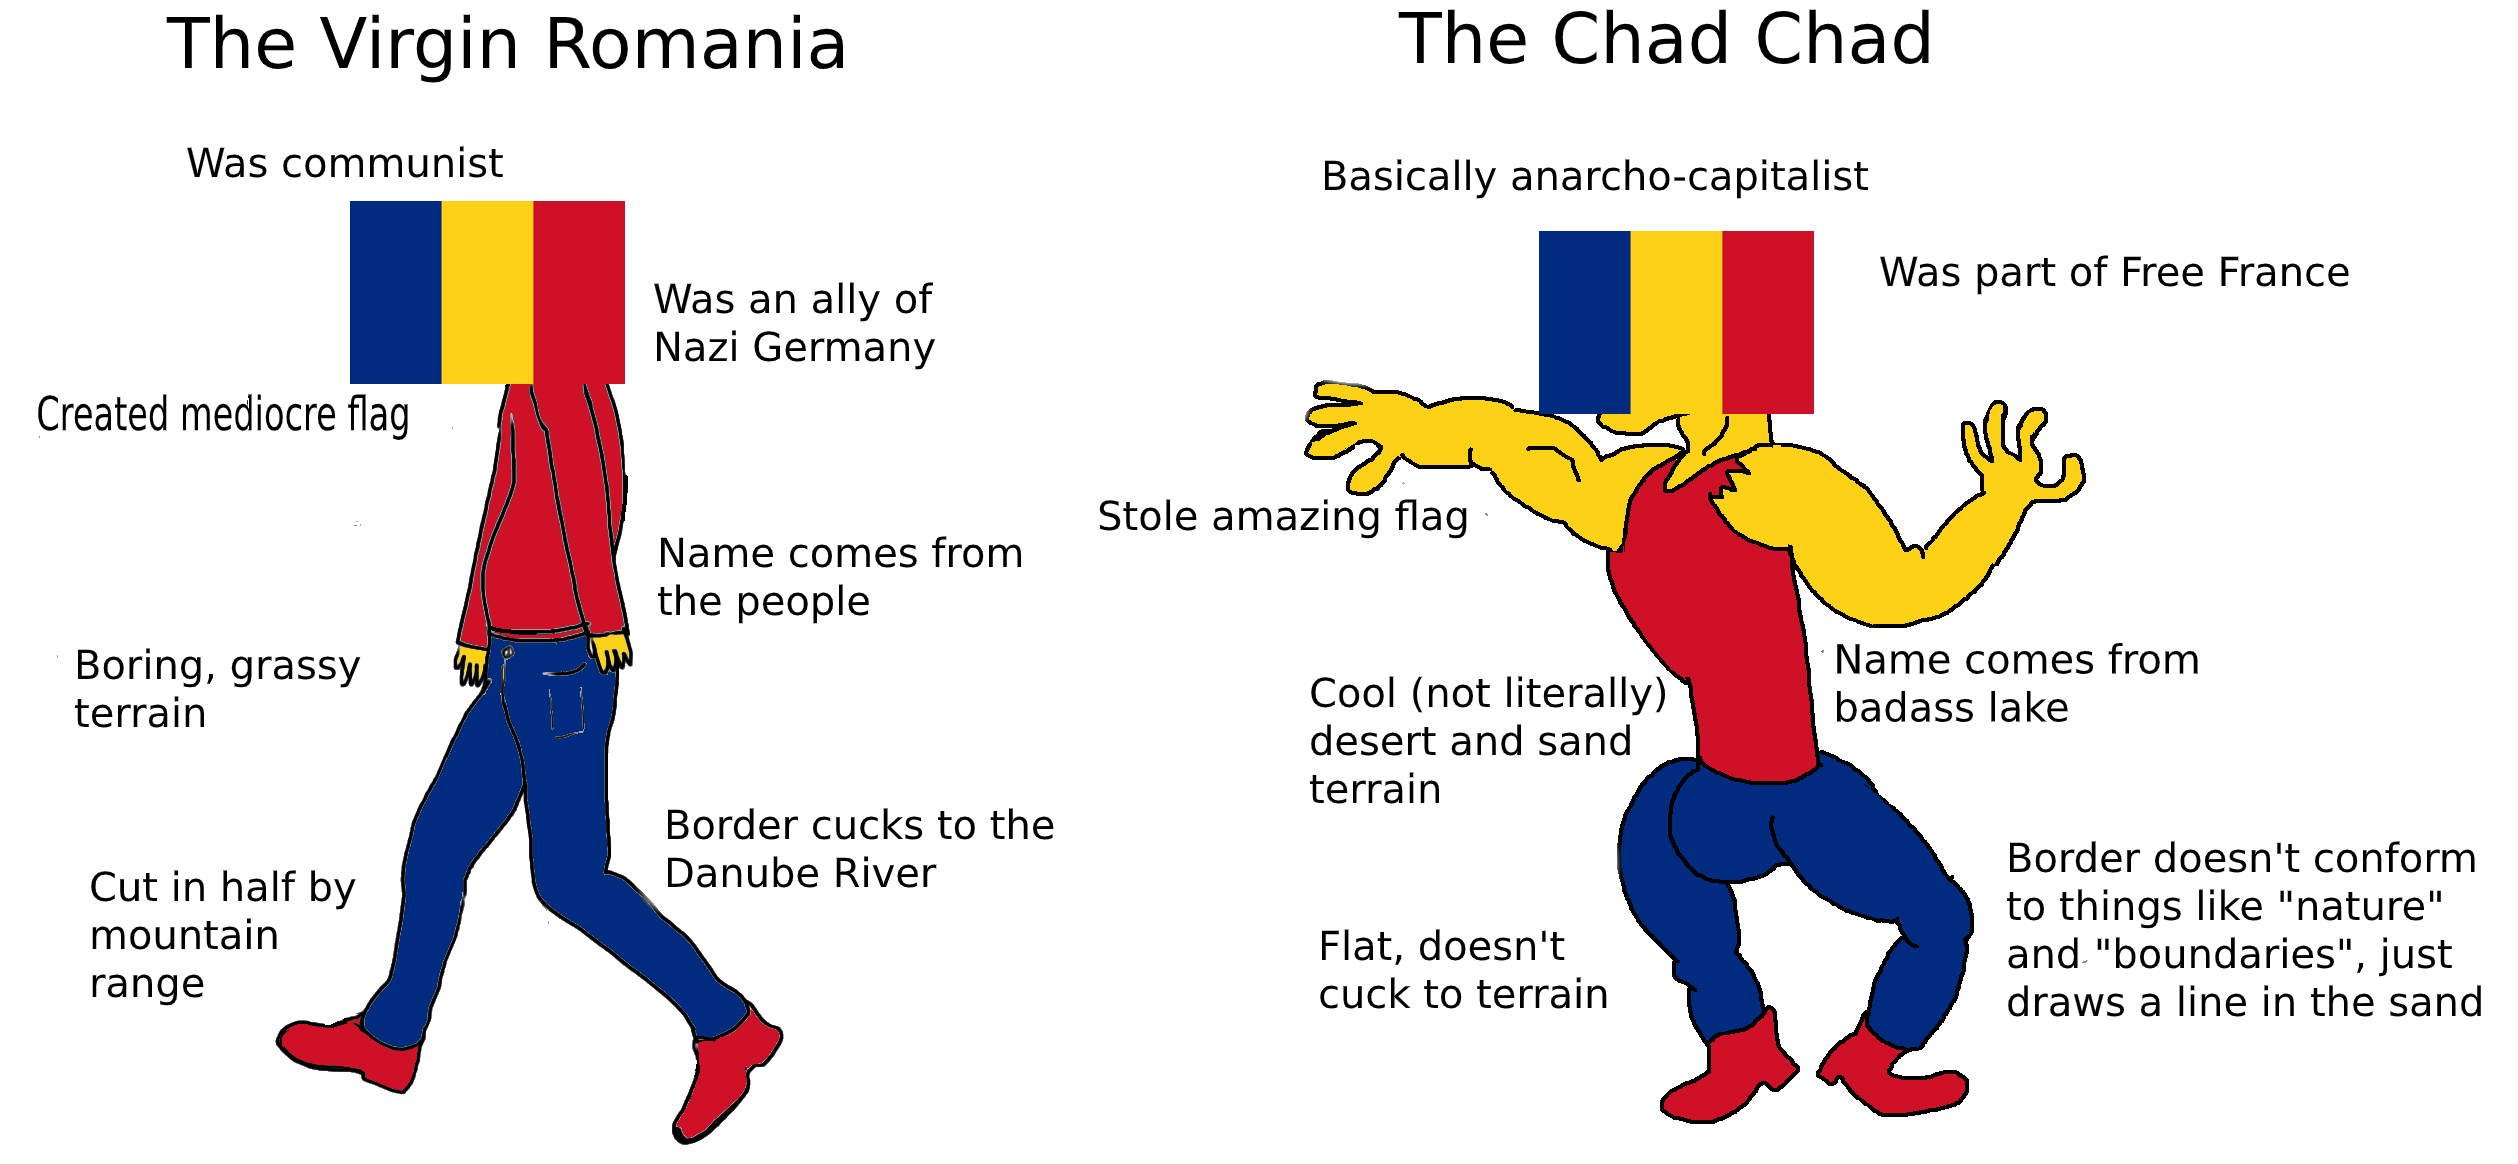 Chad>Romania